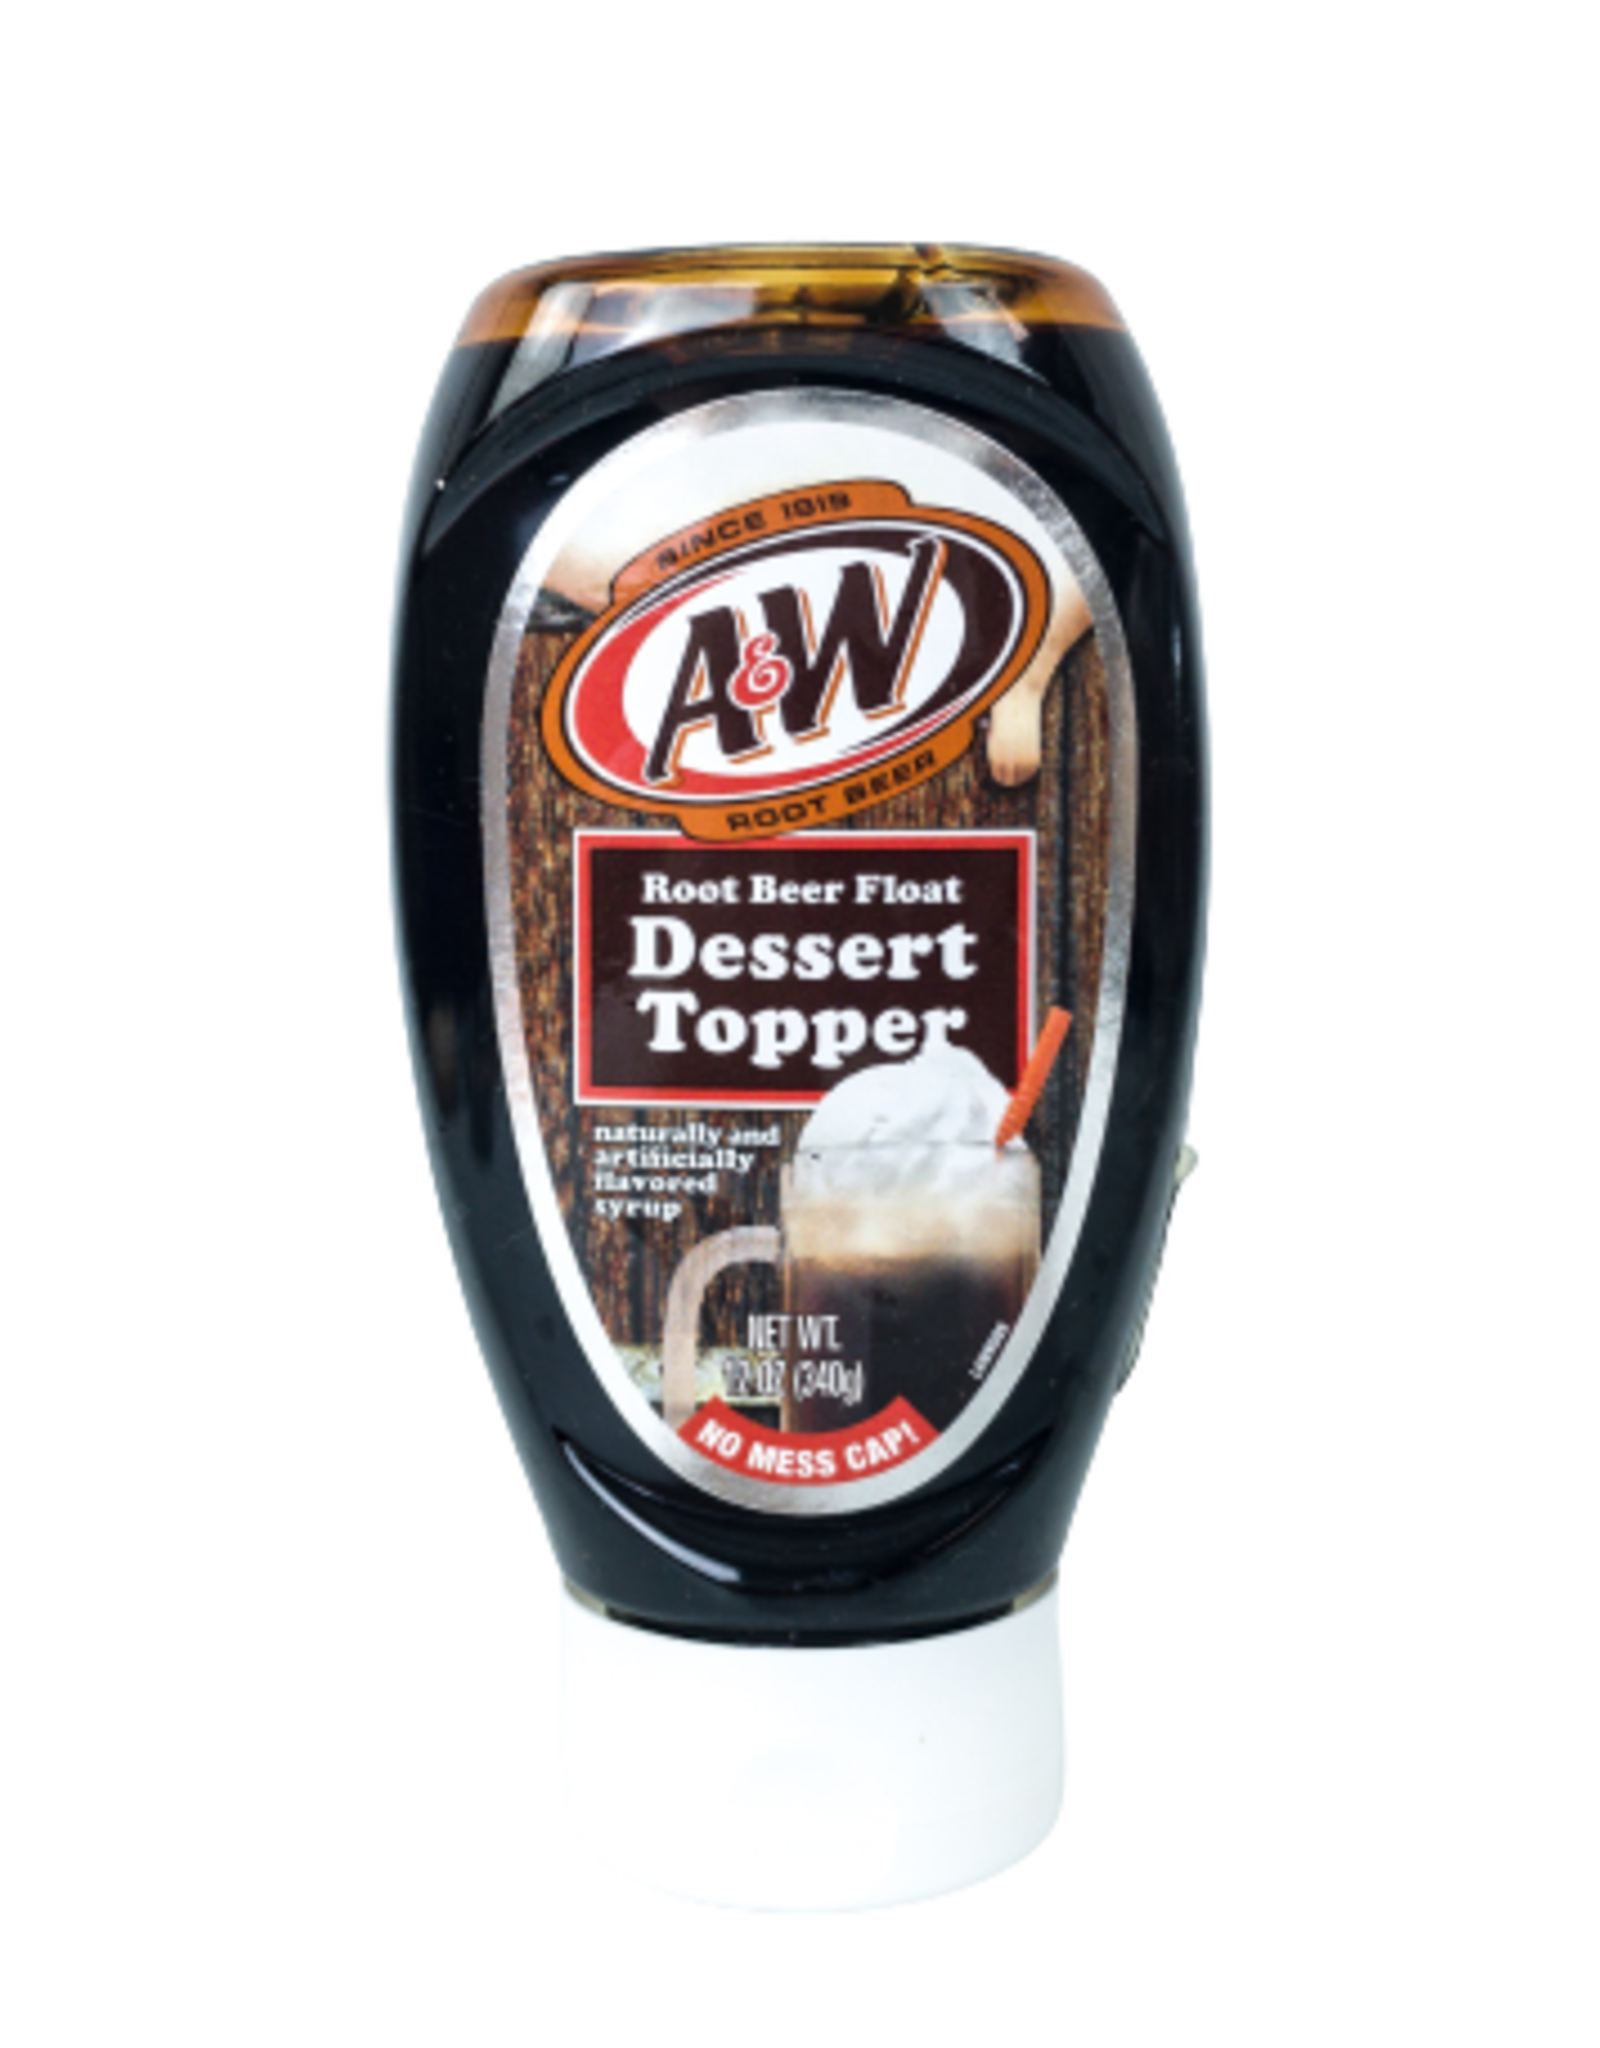 Hershey A&W Root Beer Float Dessert Topper